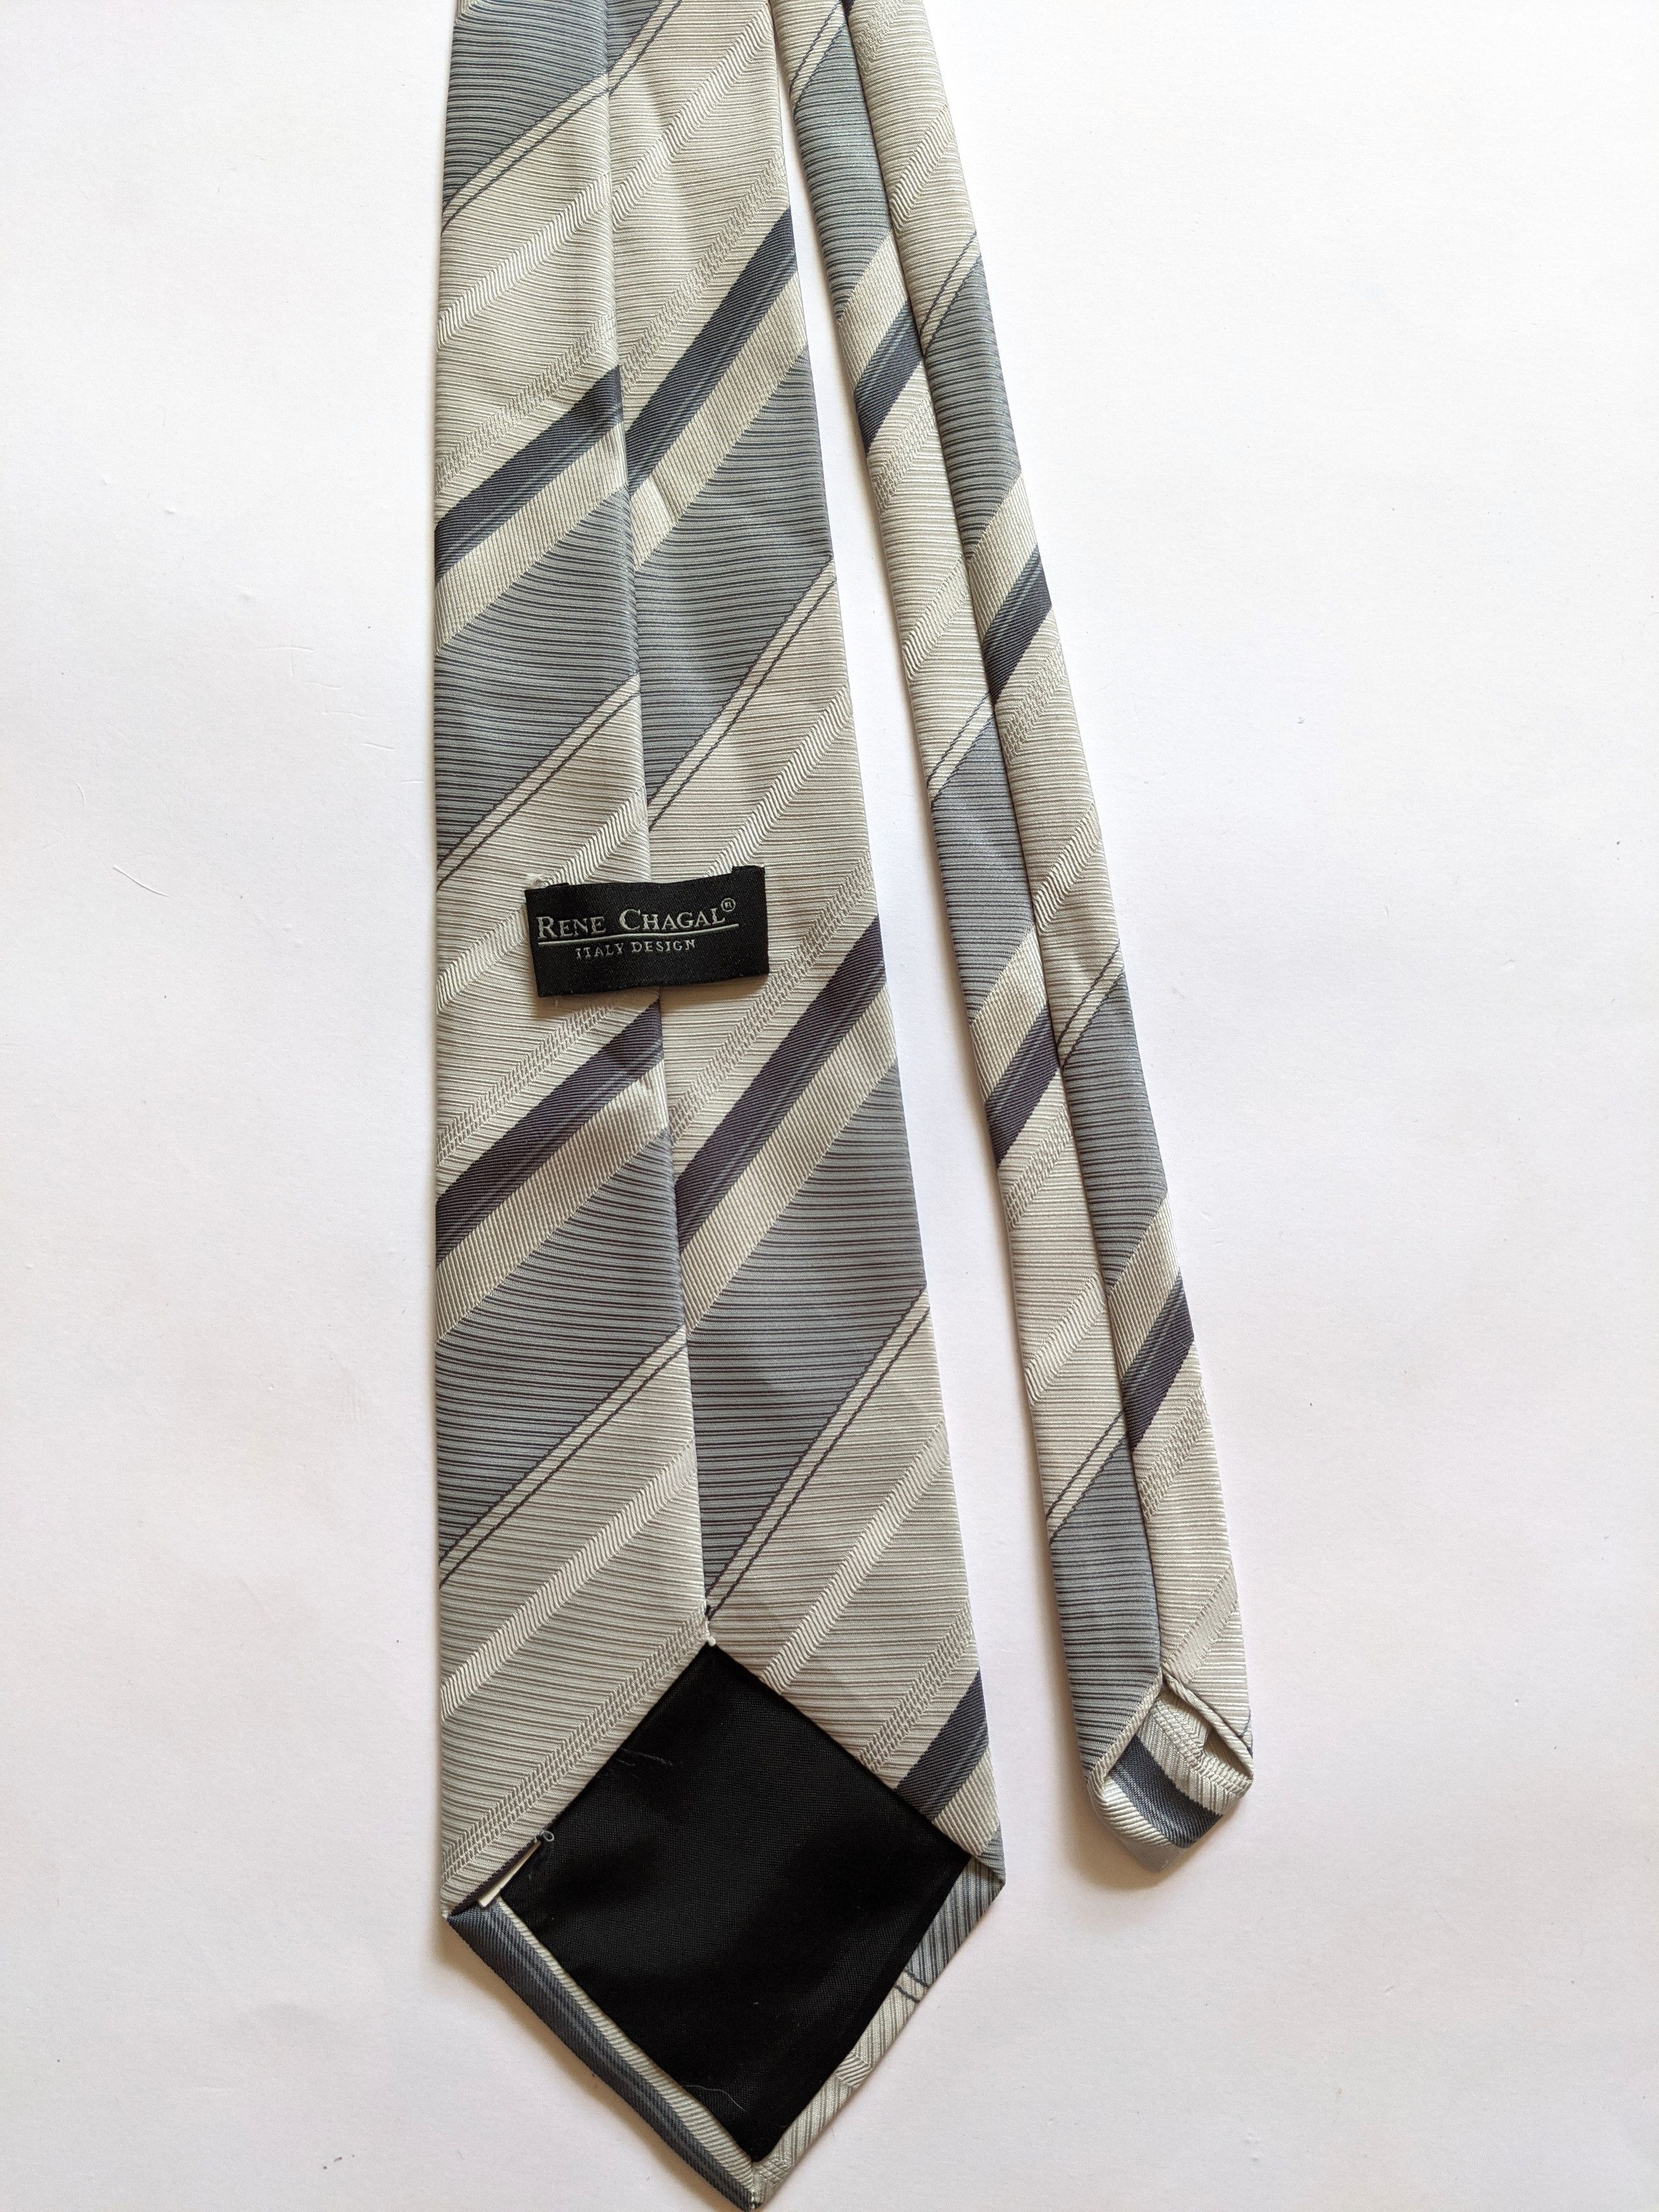 Vintage Vintage Rene Chagal Italian design striped tie | Grailed